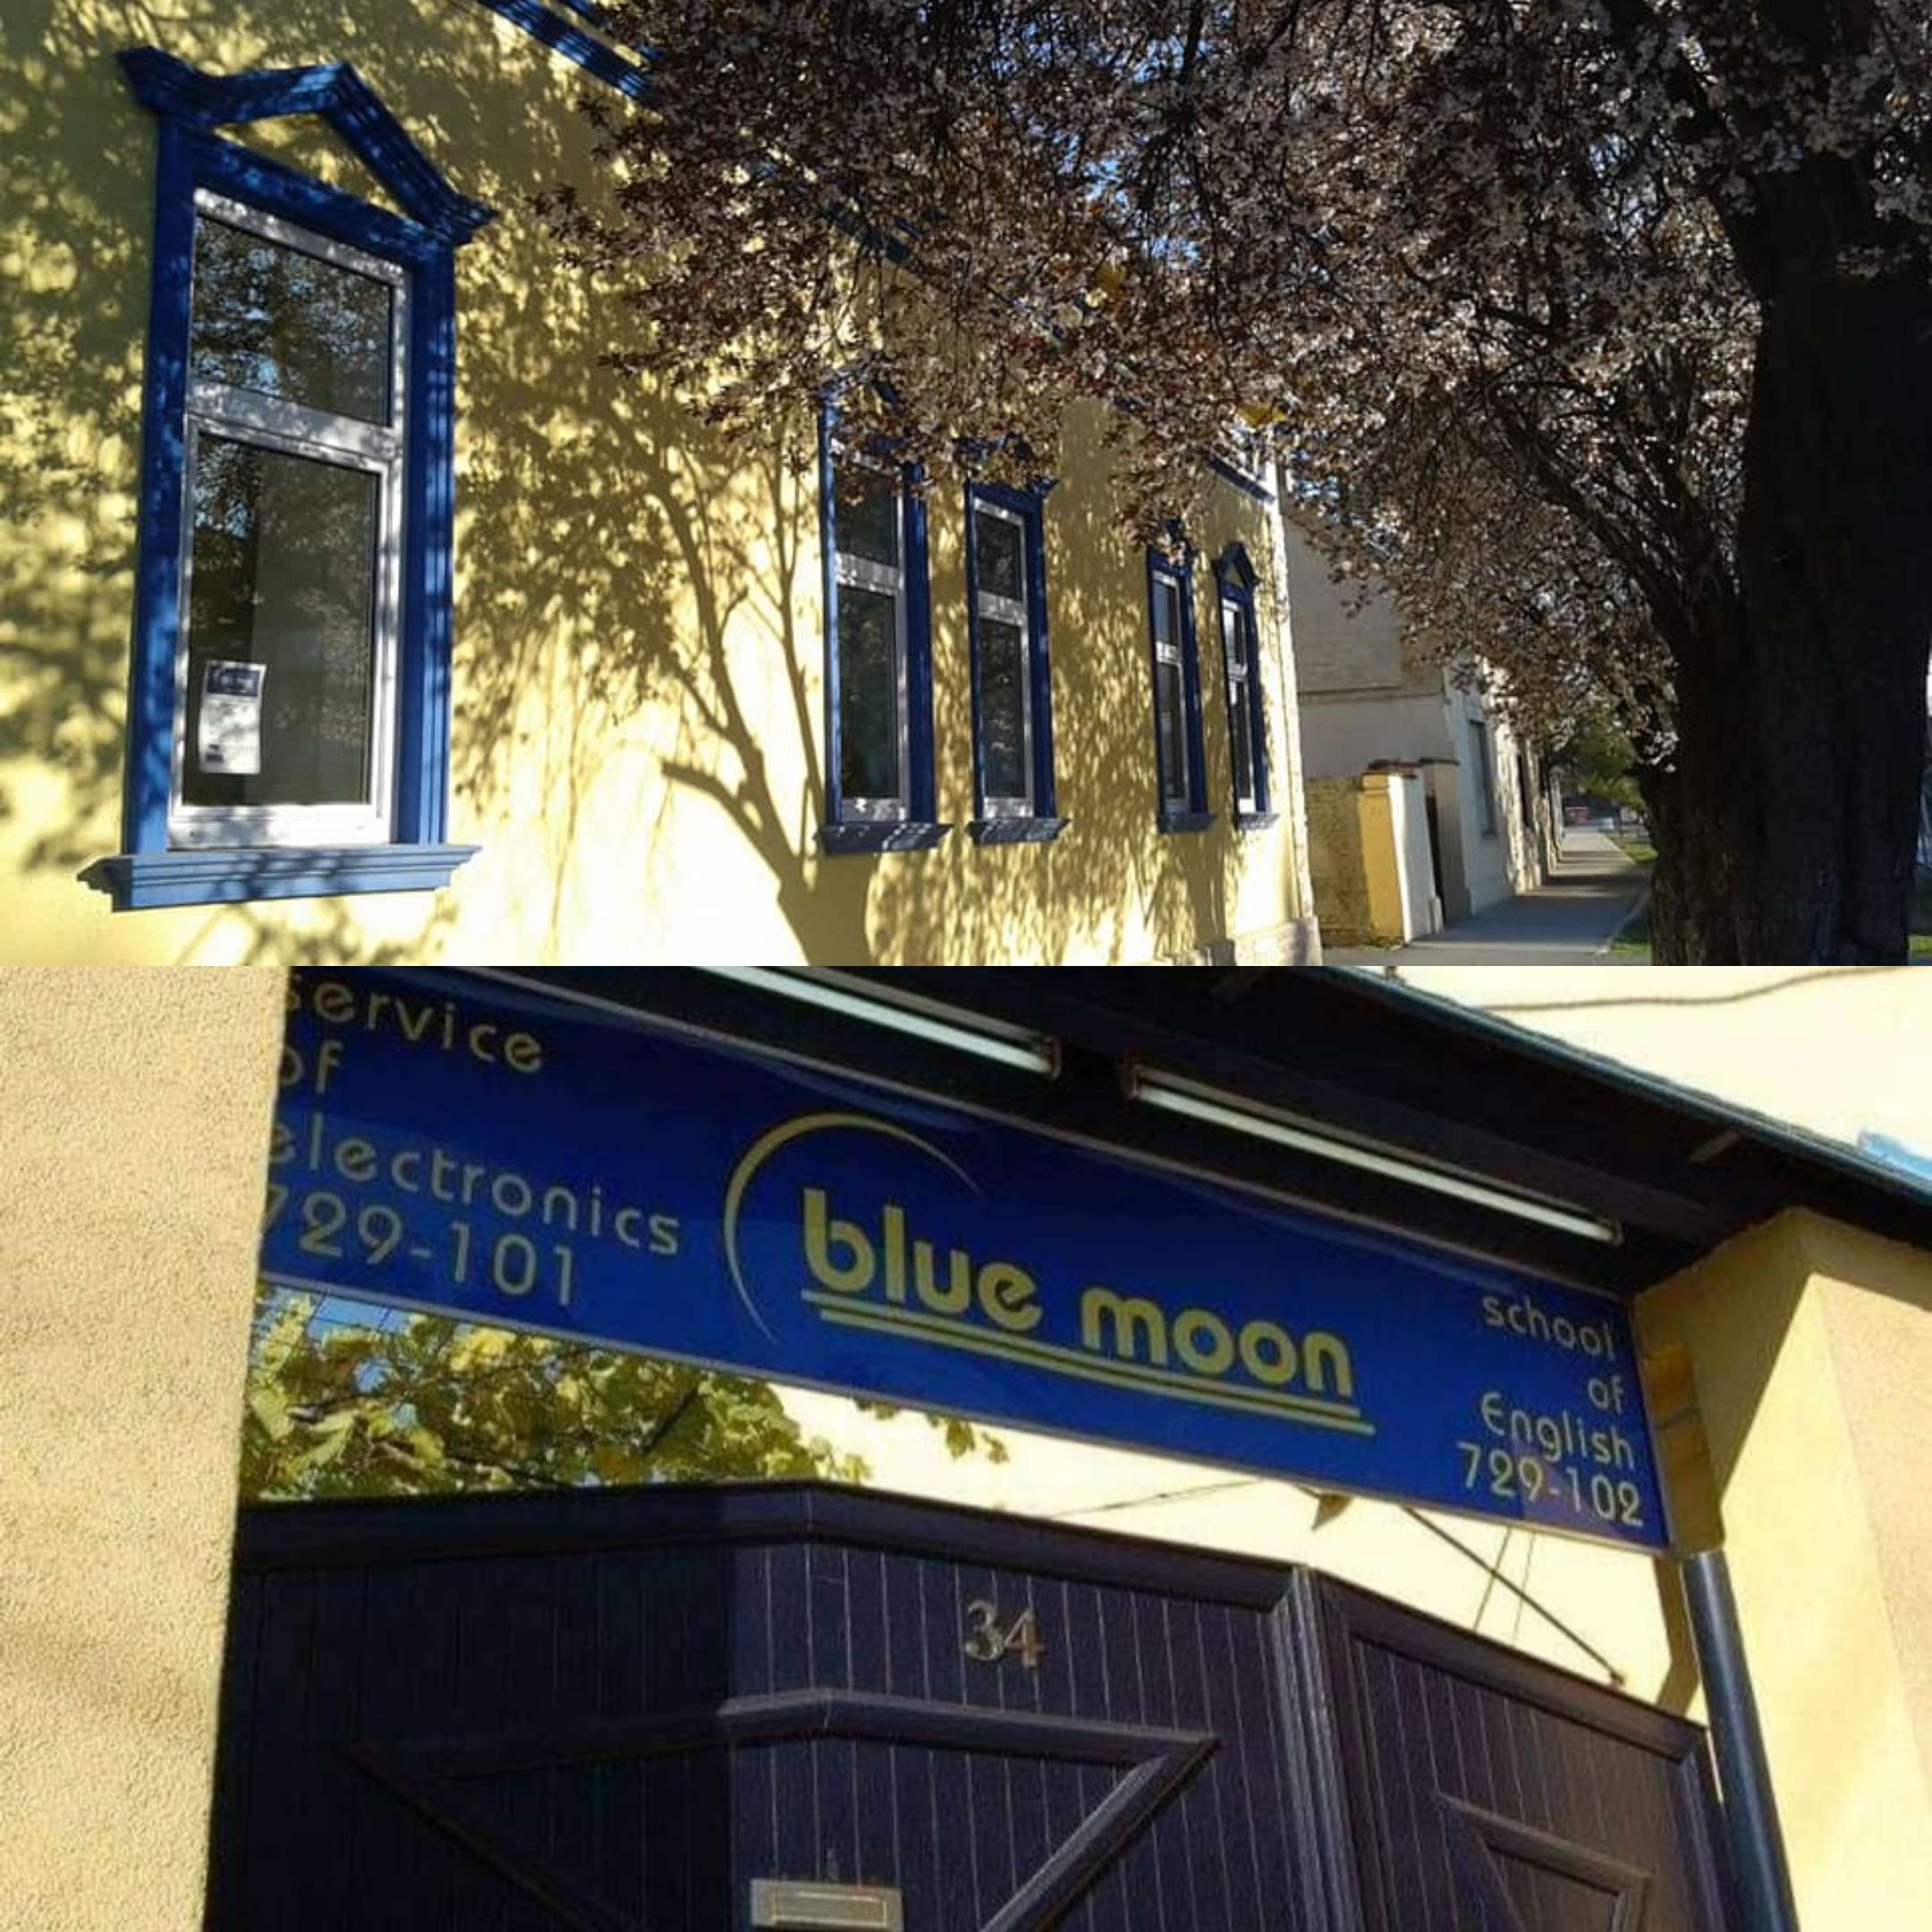 Blue Moon School of English